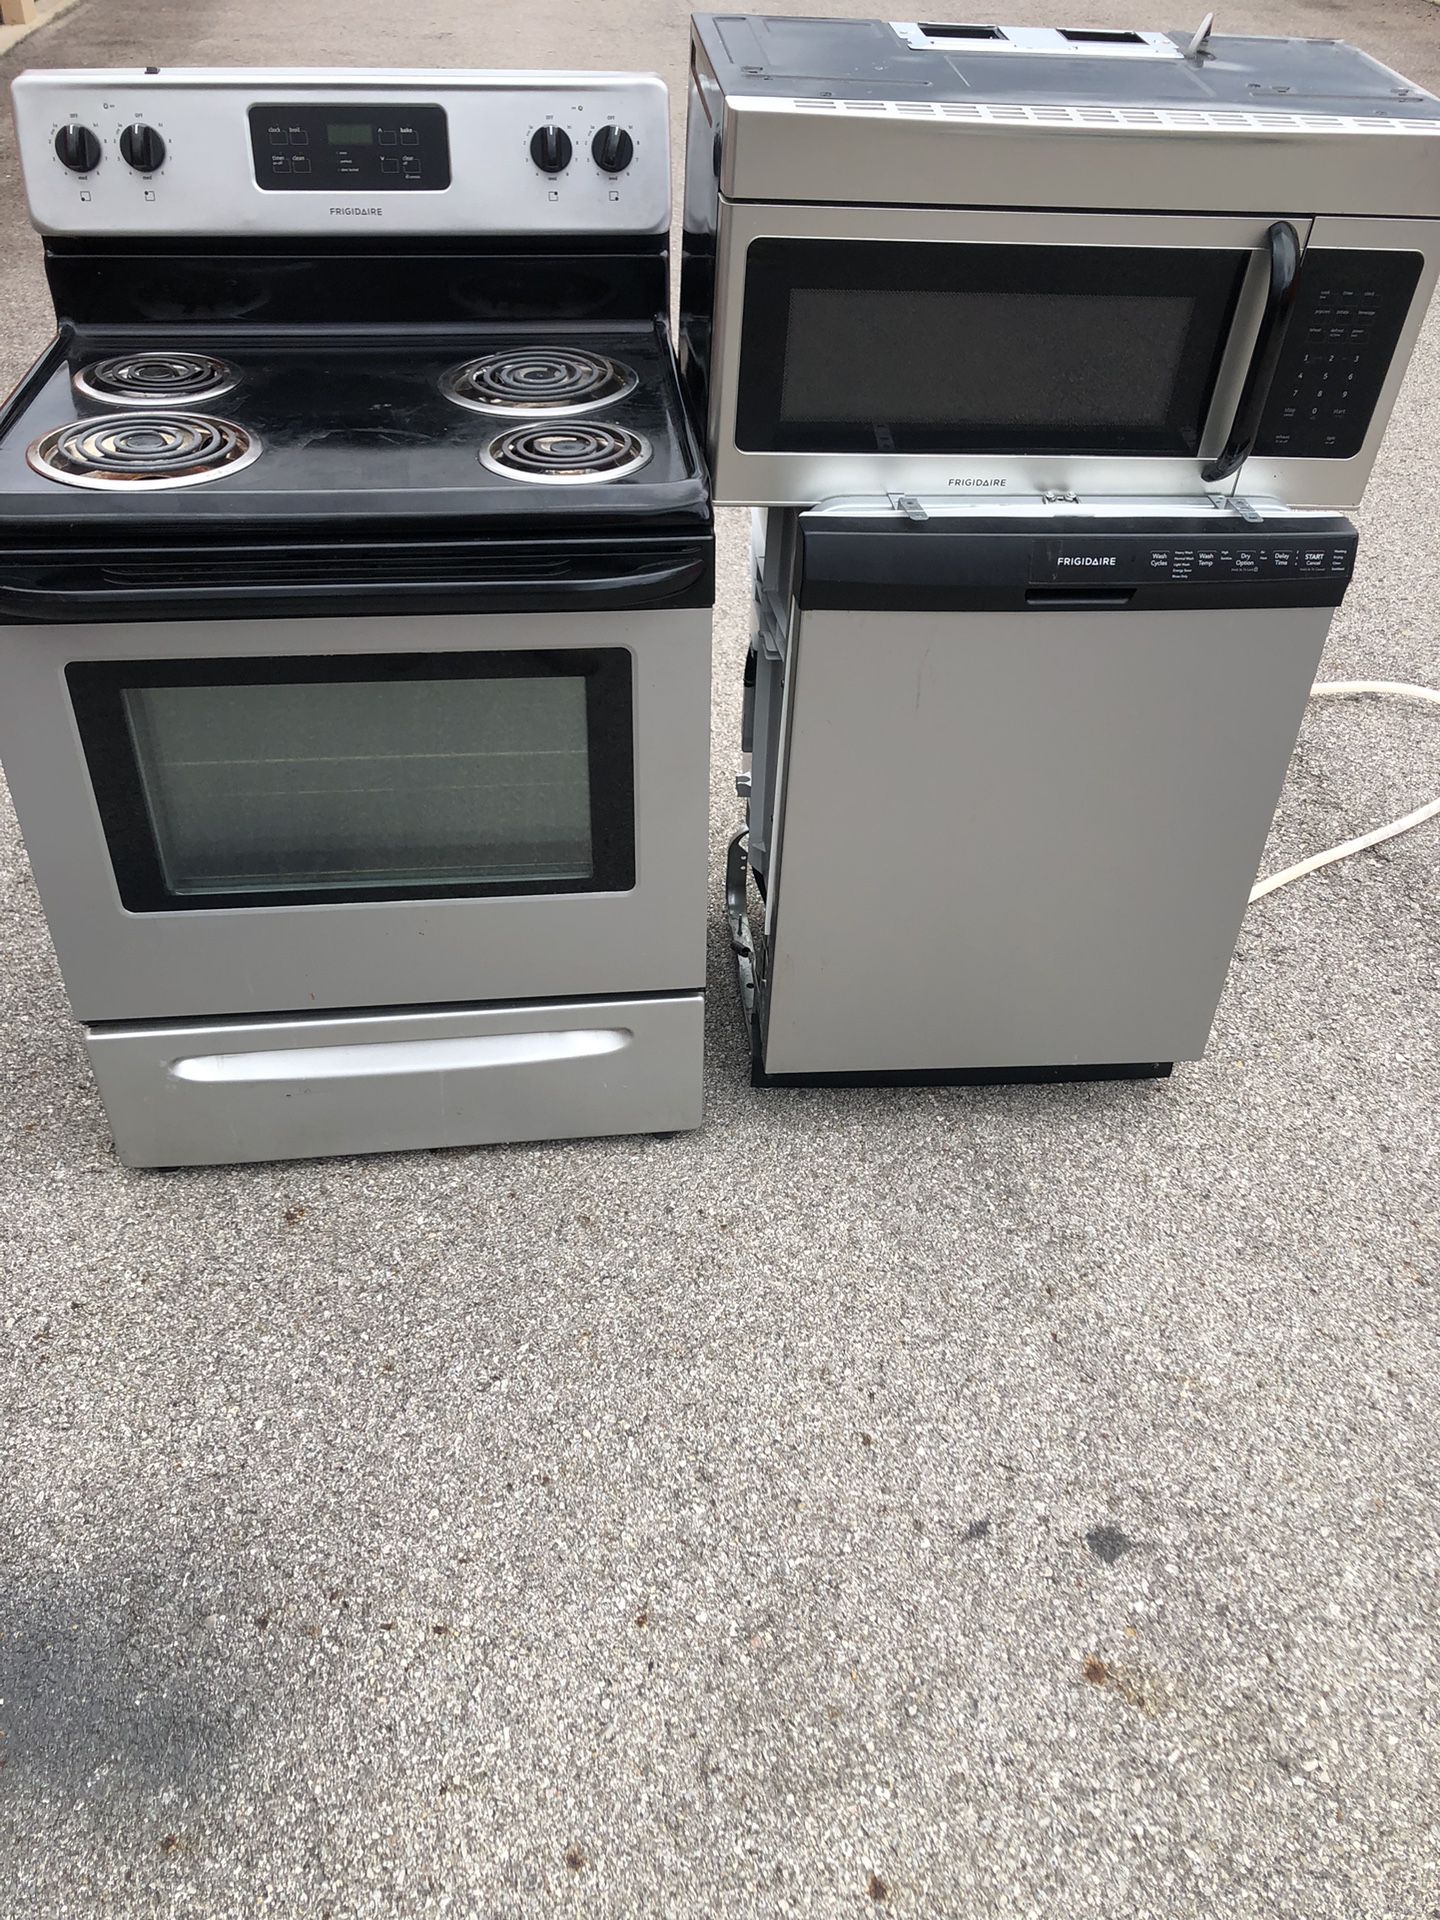 Stove,dishwasher And Over Range Microwave 